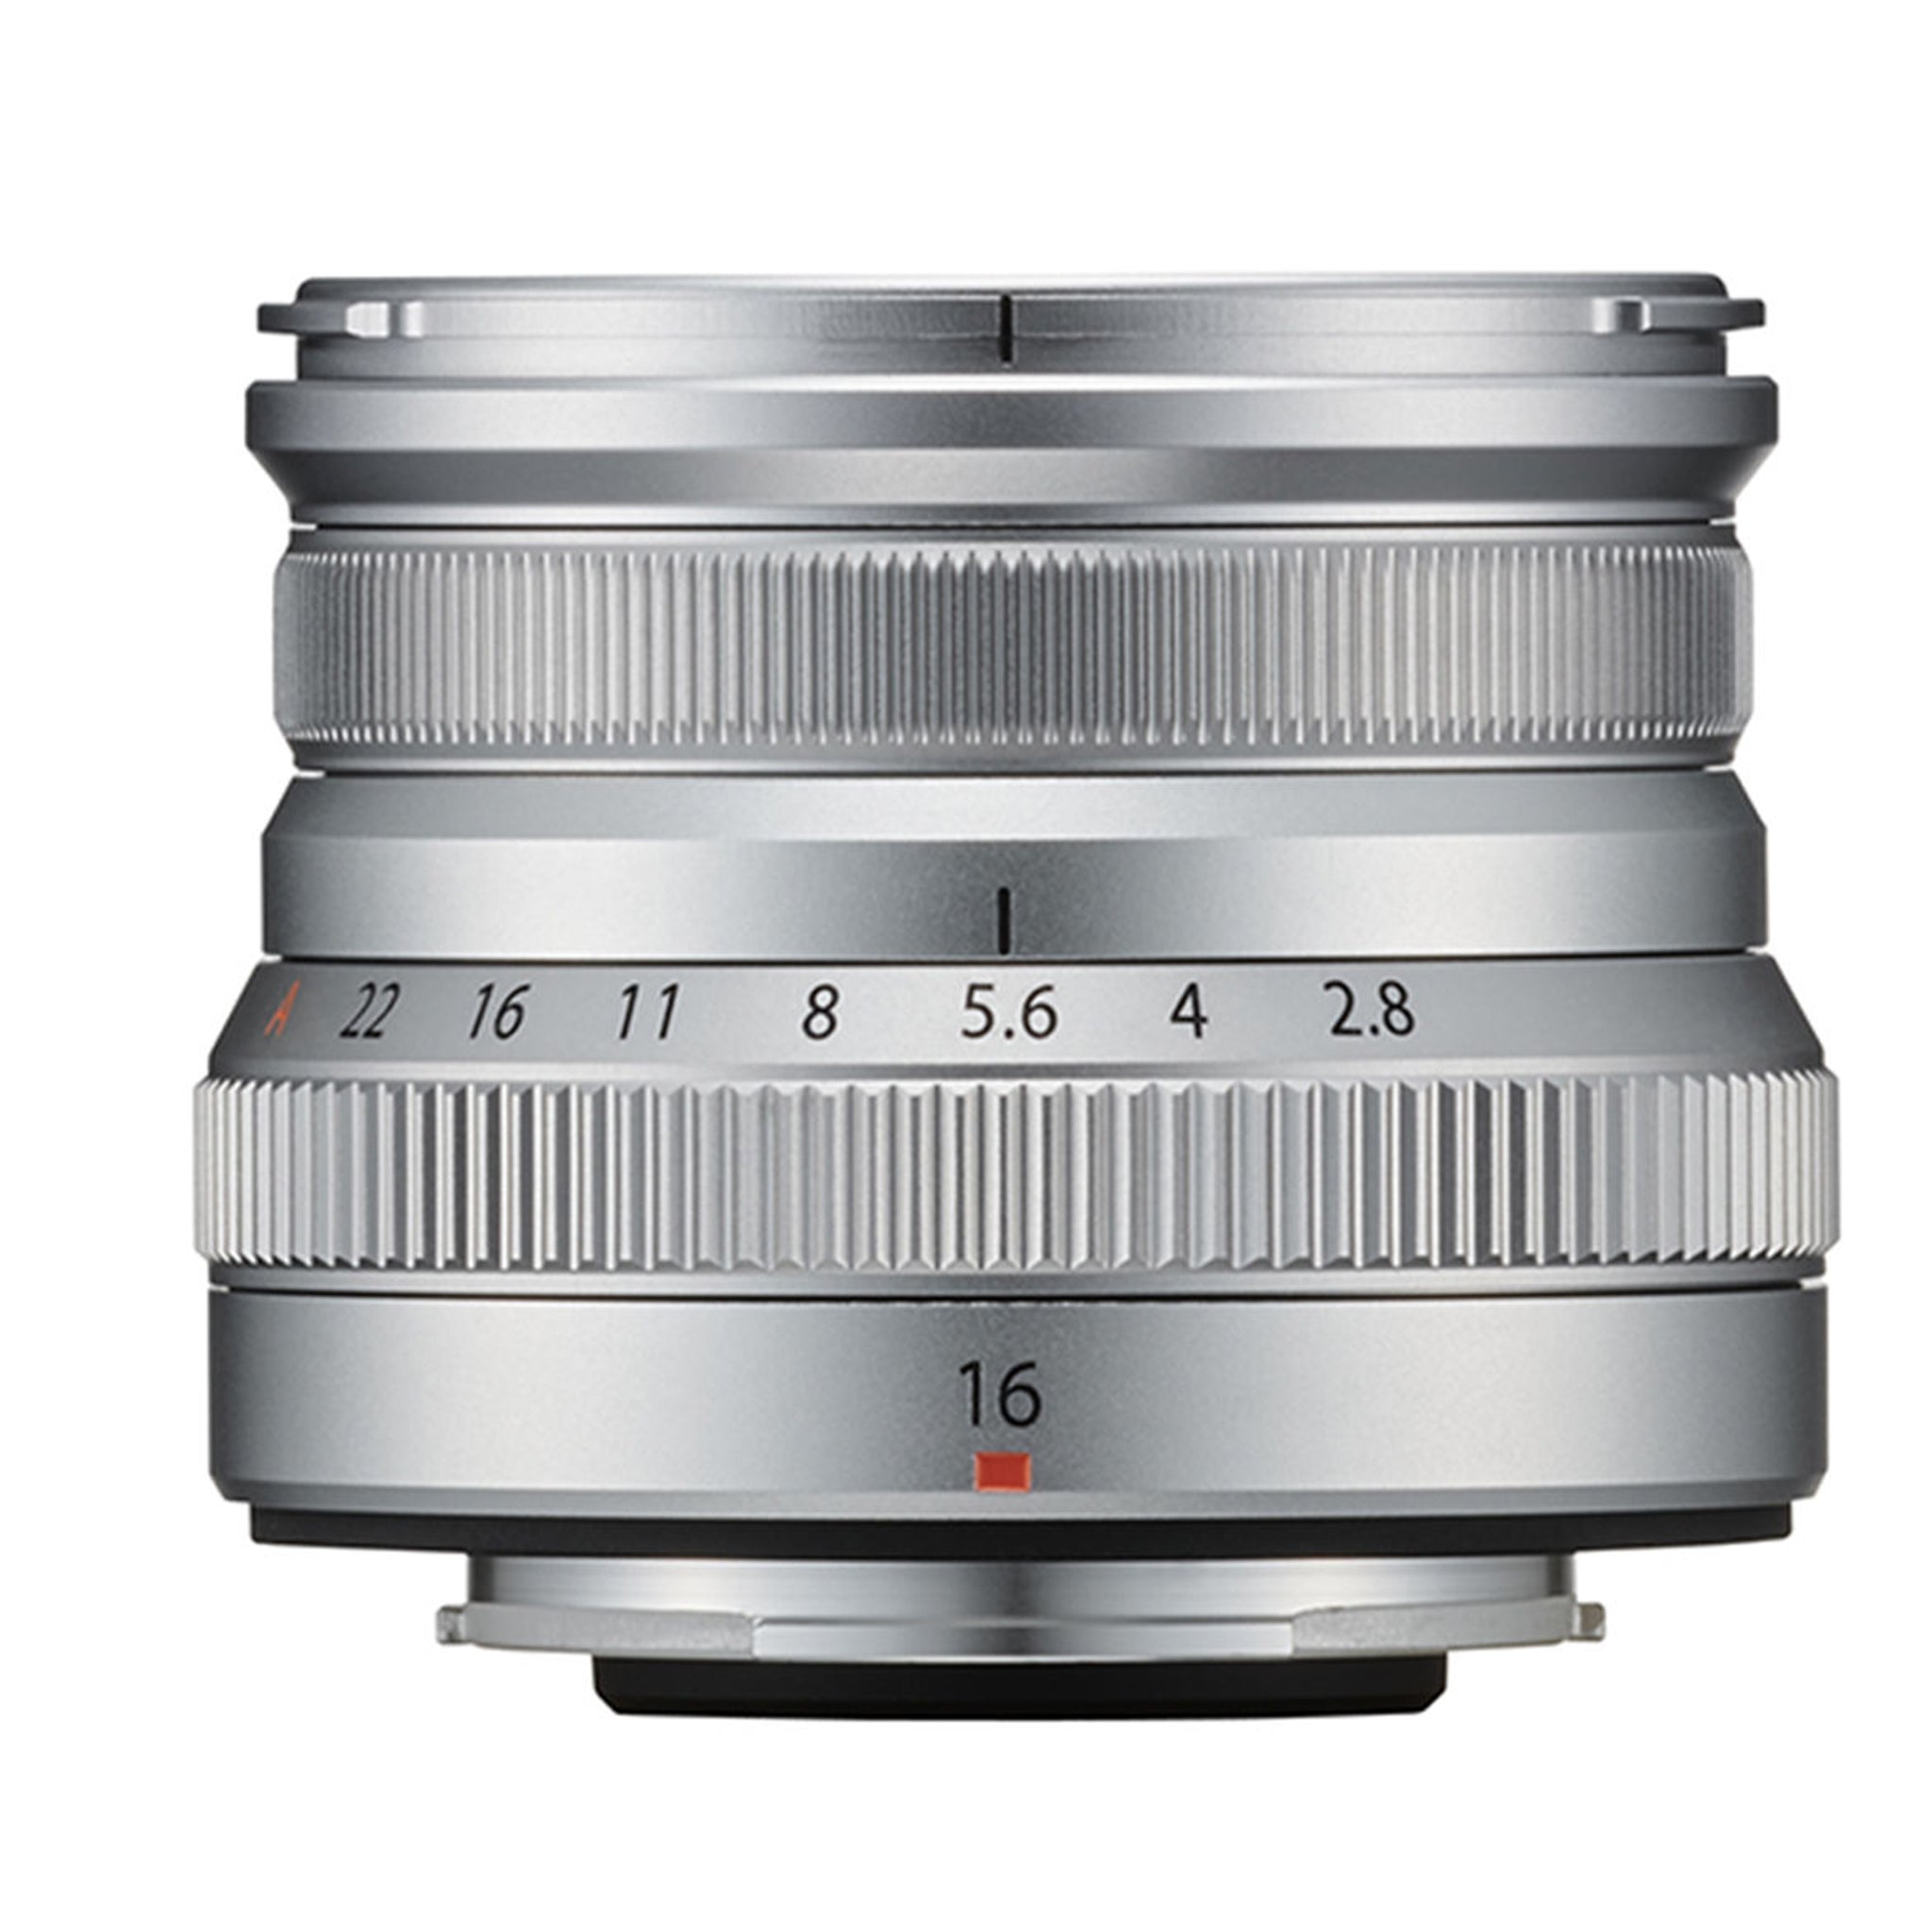 Fujifilm XF 16mm F2.8 WR Lens